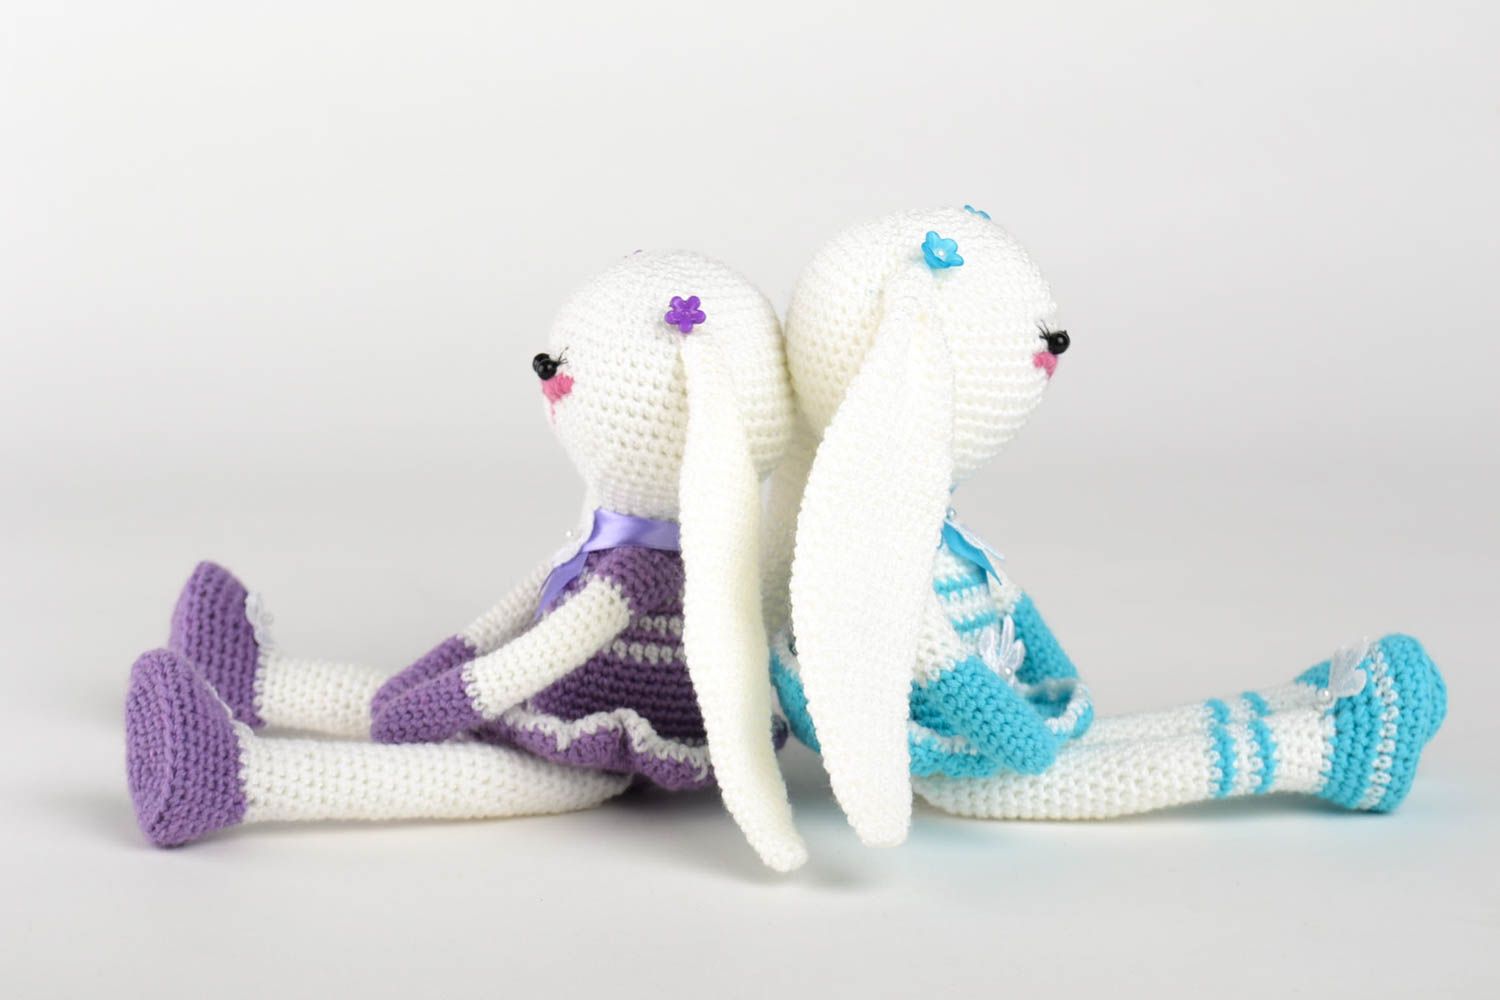 Handmade crocheted designer toys home decor ideas cute soft toys for children photo 2